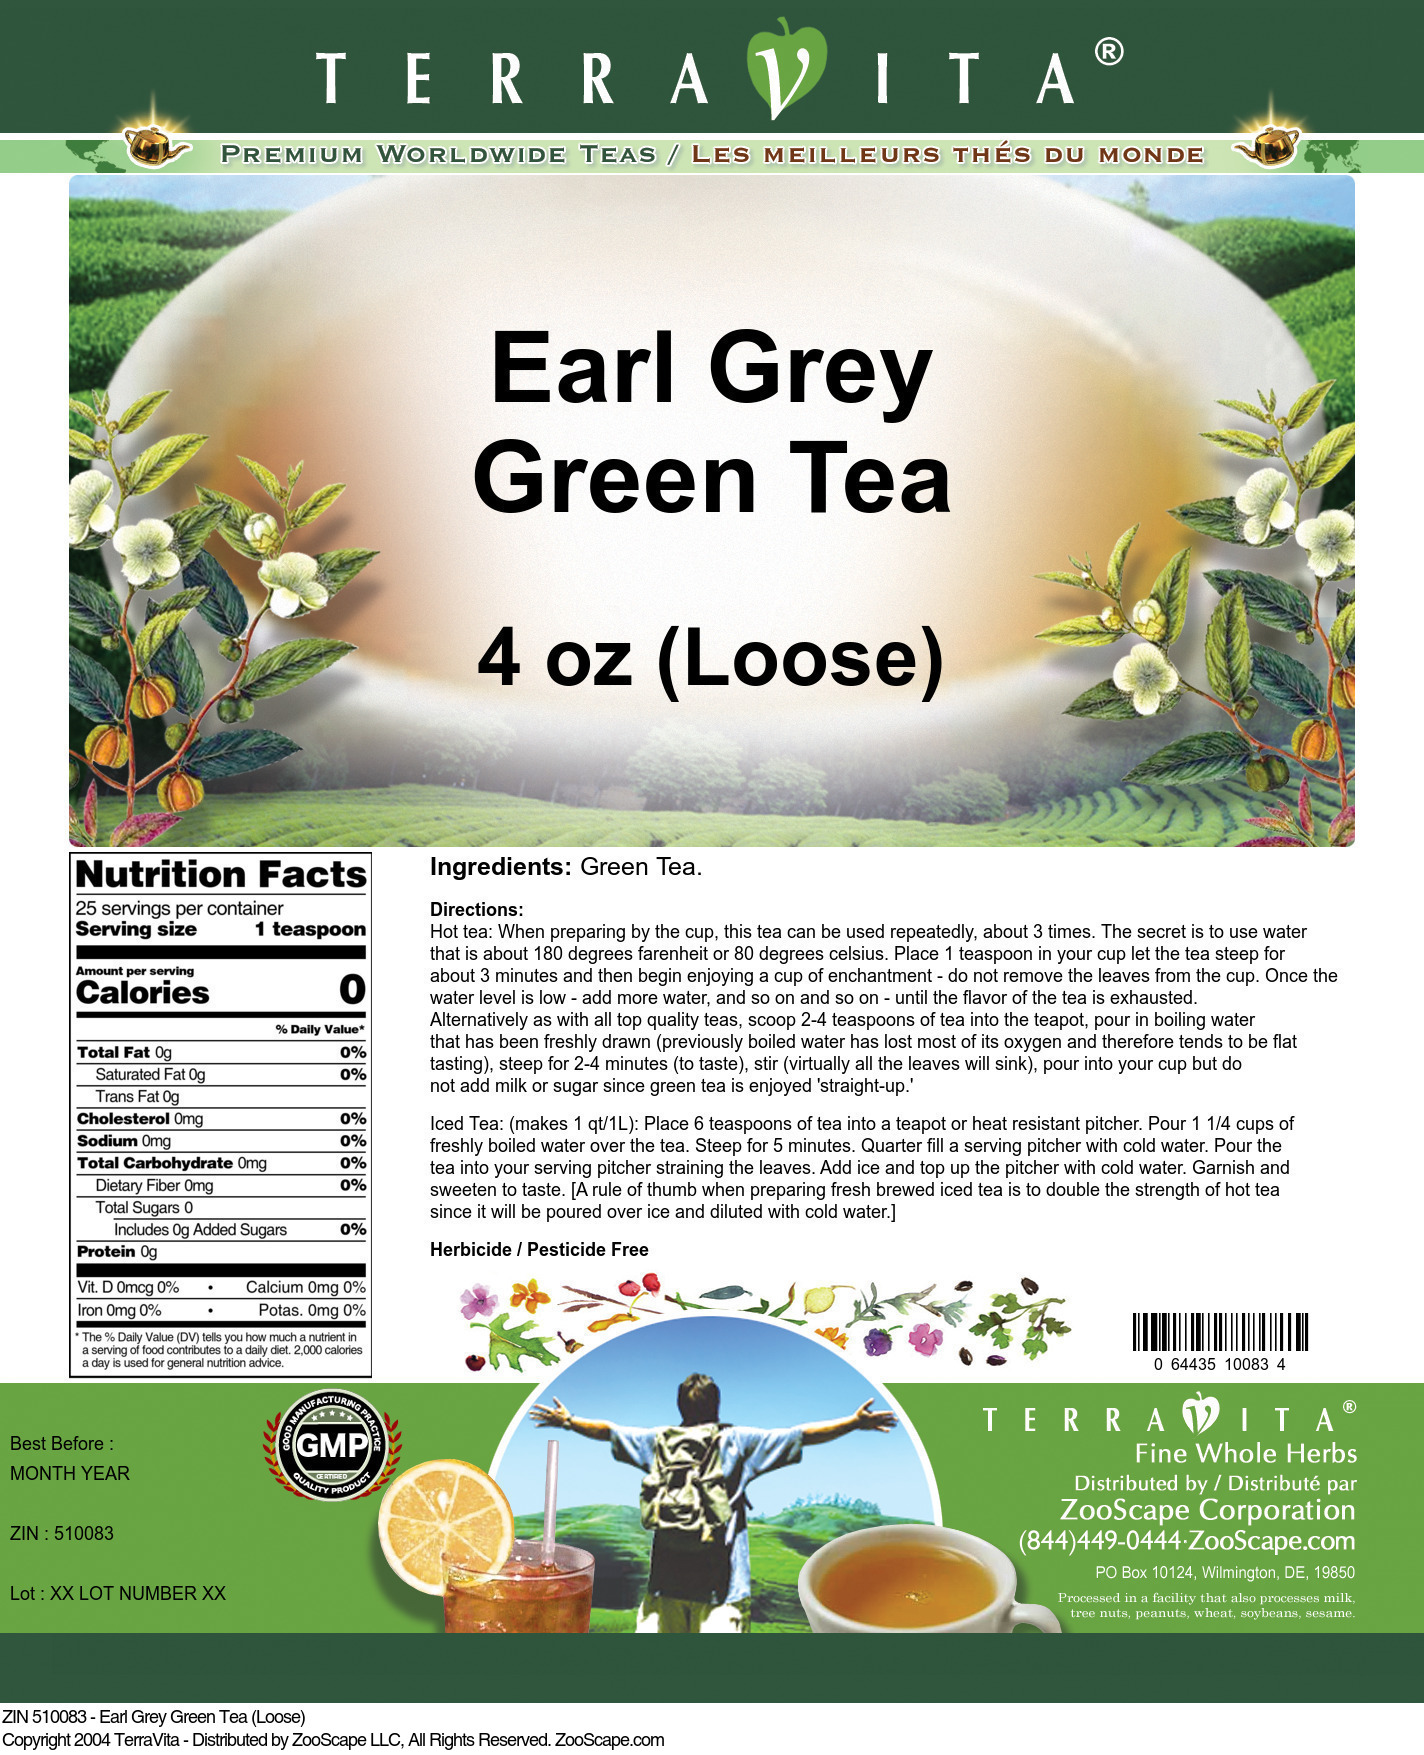 Earl Grey Green Tea (Loose) - Label